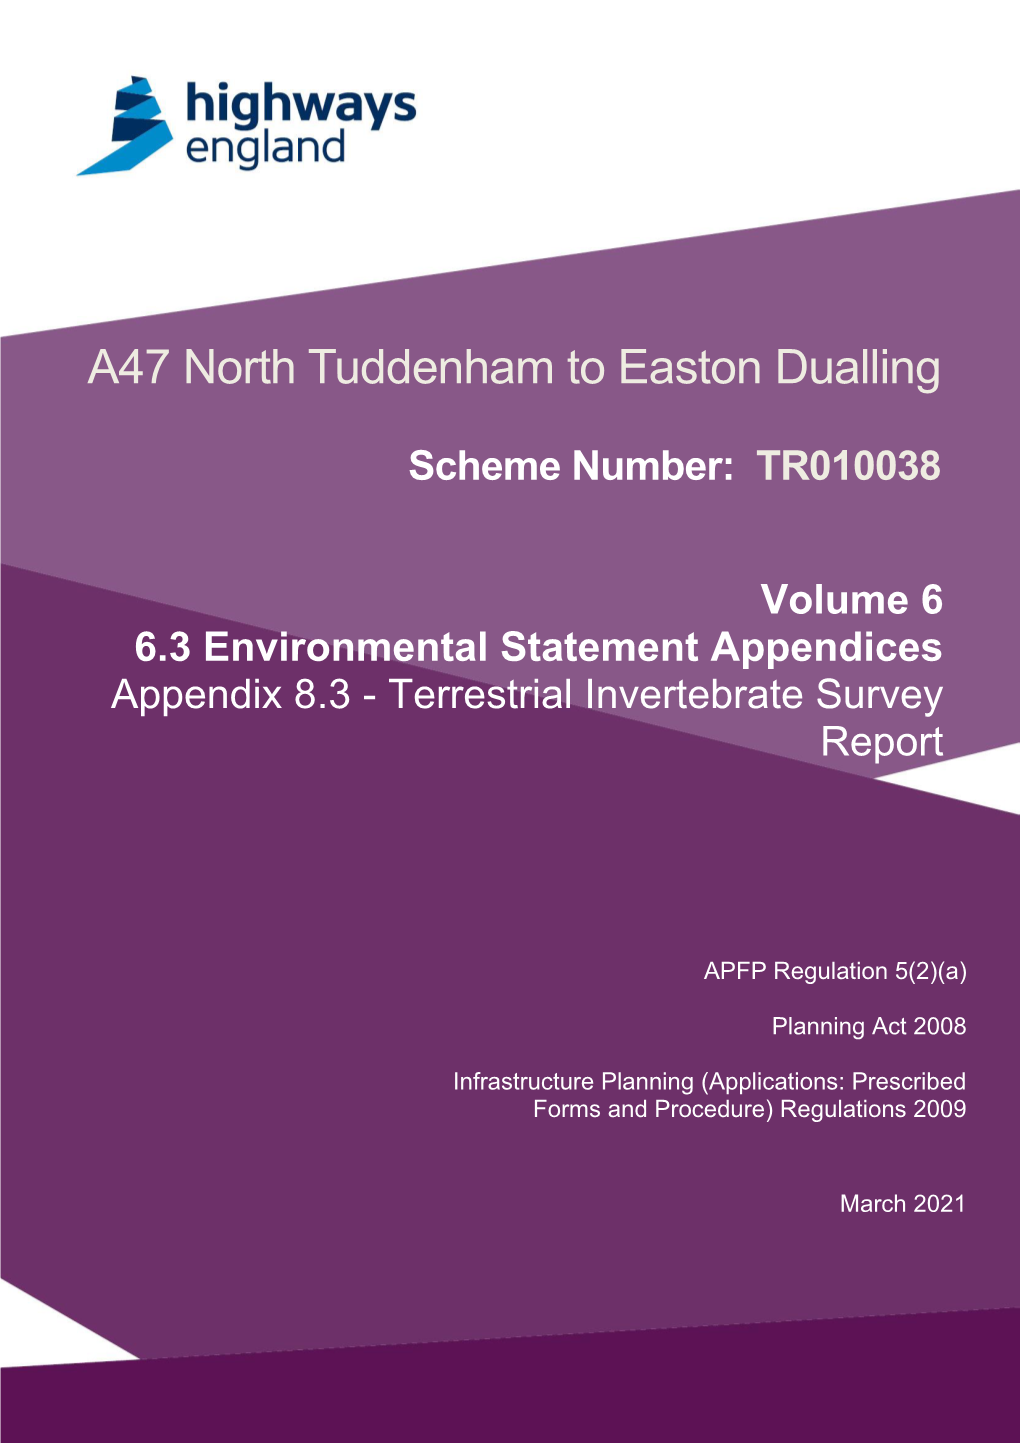 A47 North Tuddenham to Easton Dualling Environmental Statement Appendices